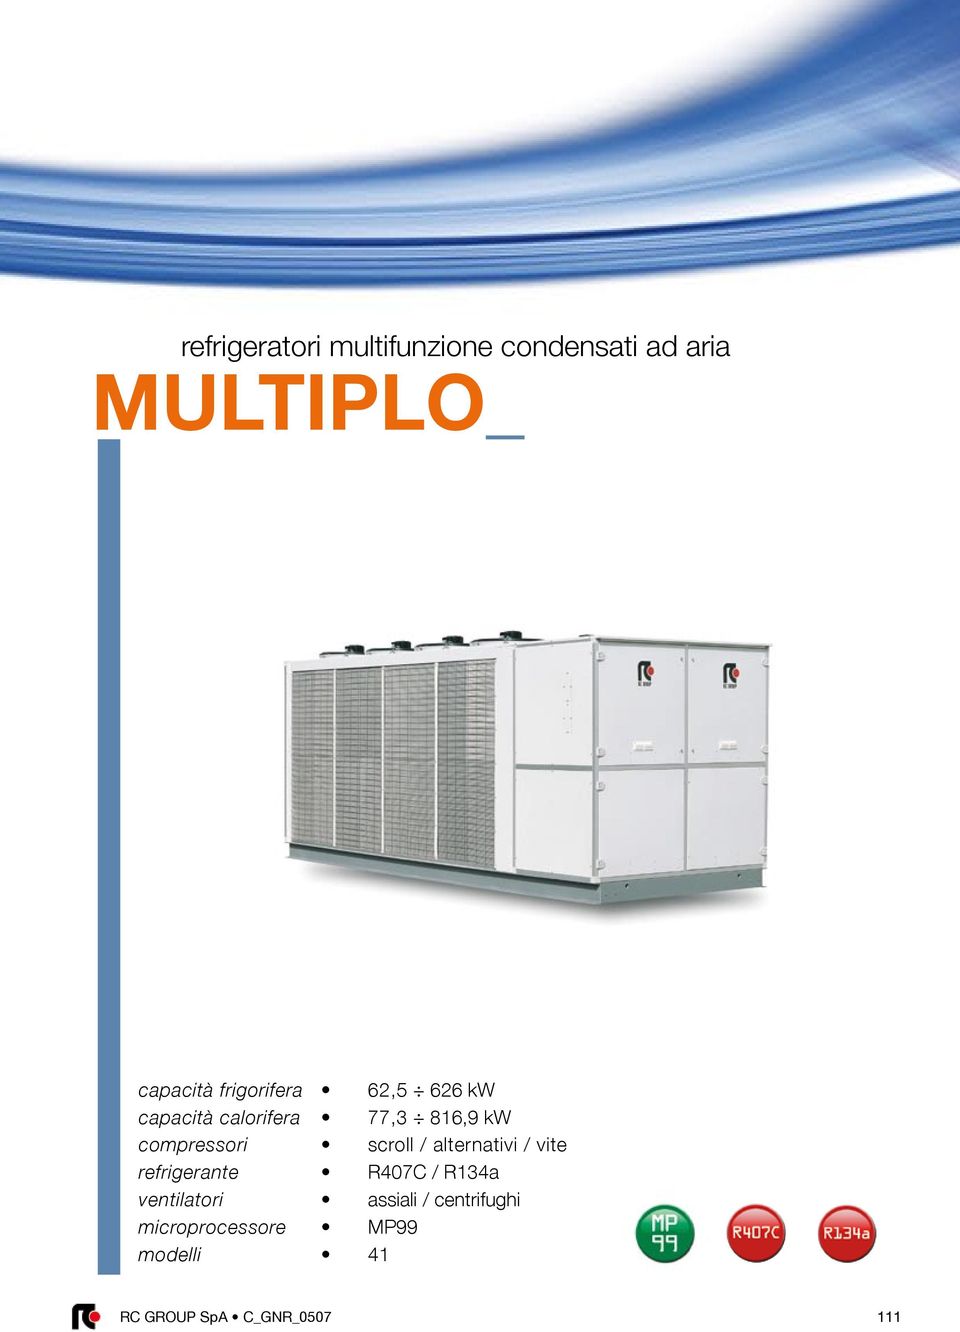 vite refrigerante R407C / R134a ventilatori assiali /